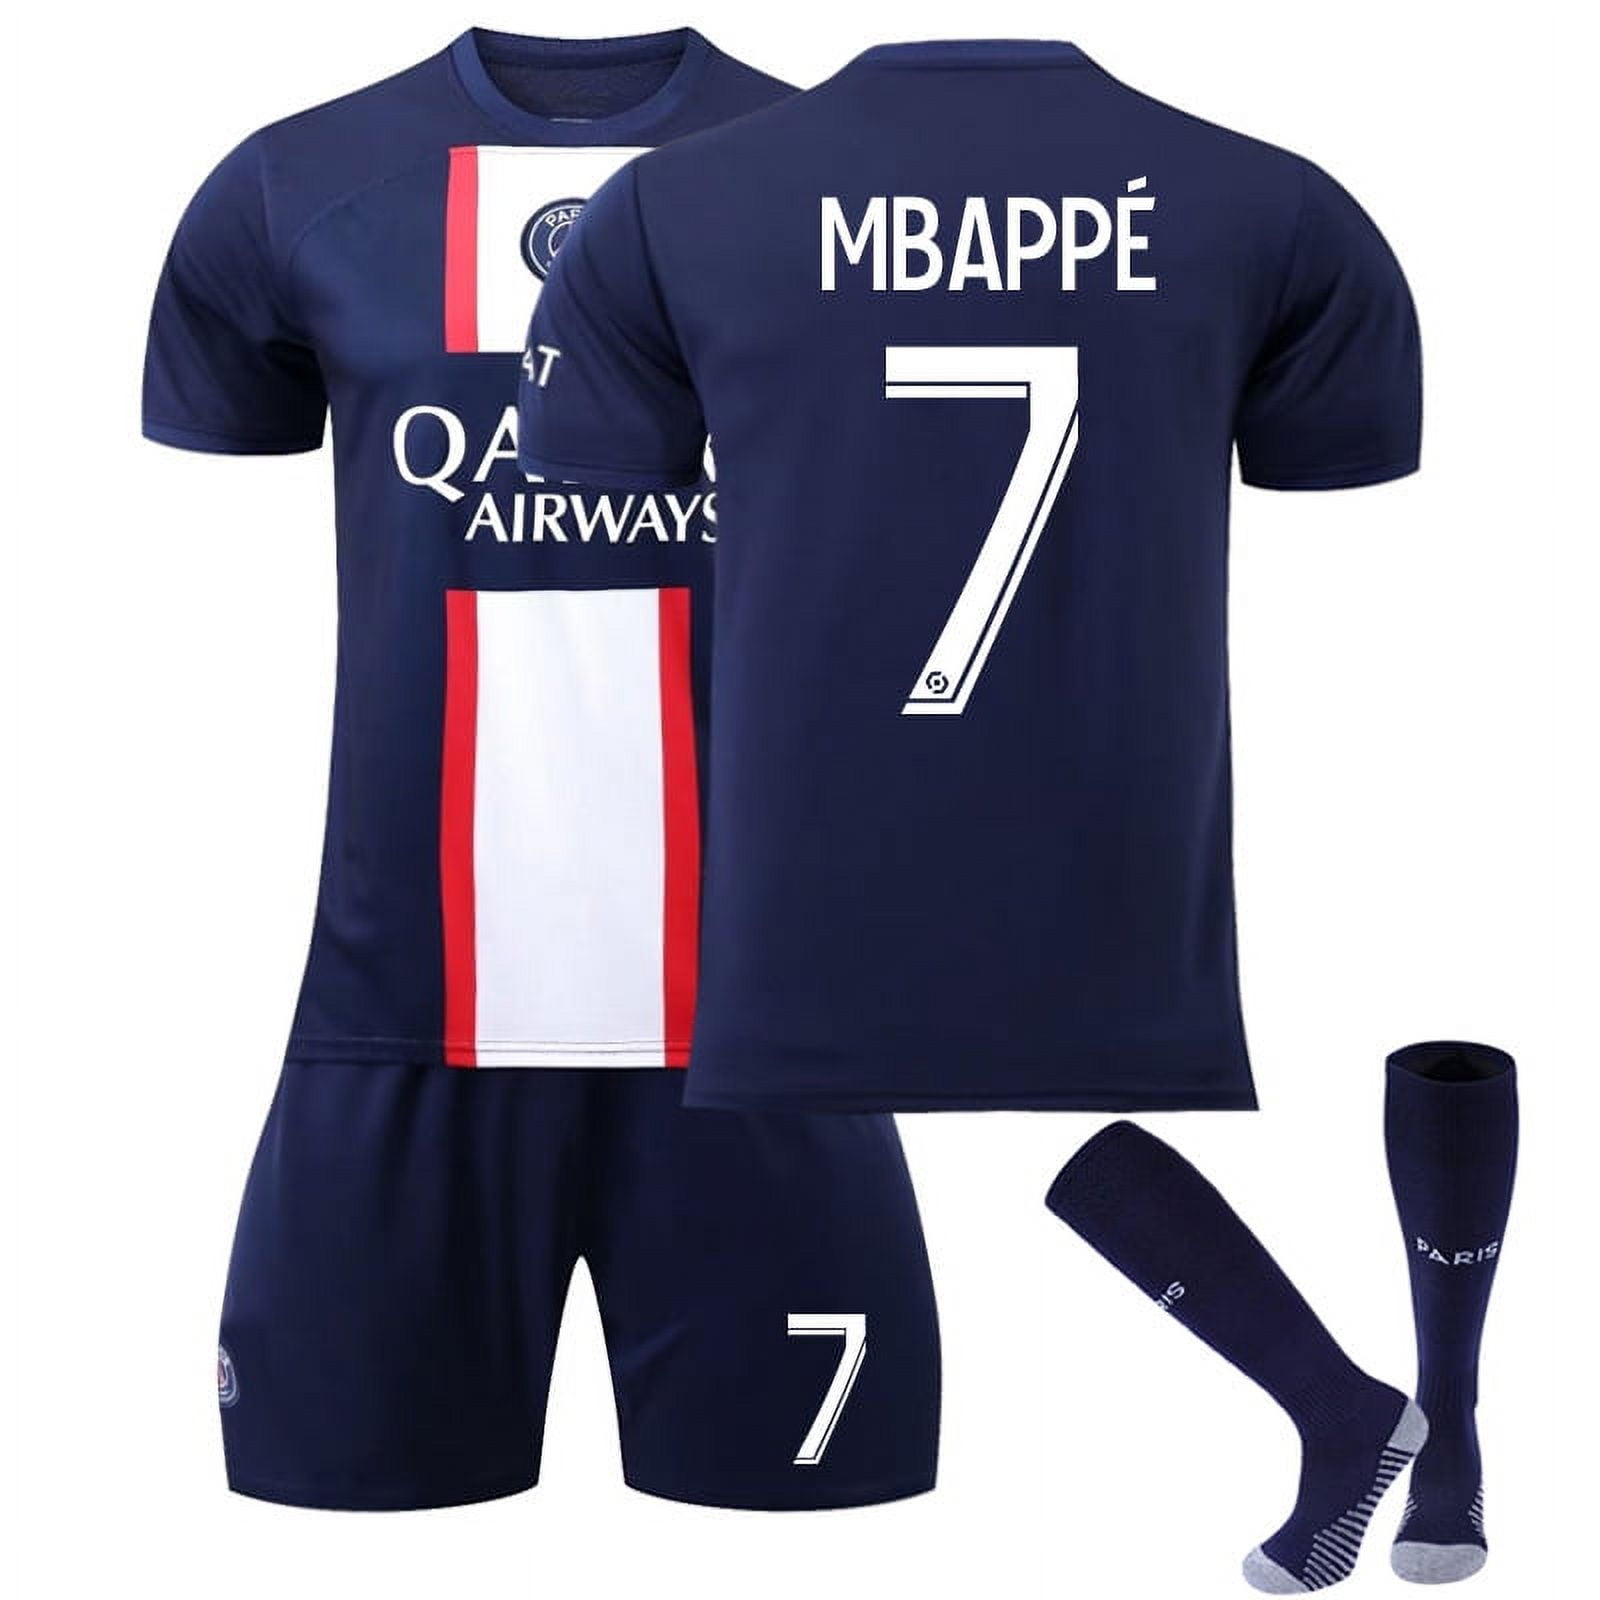 Paris Saint-Germain Black International Club Soccer Fan Jerseys